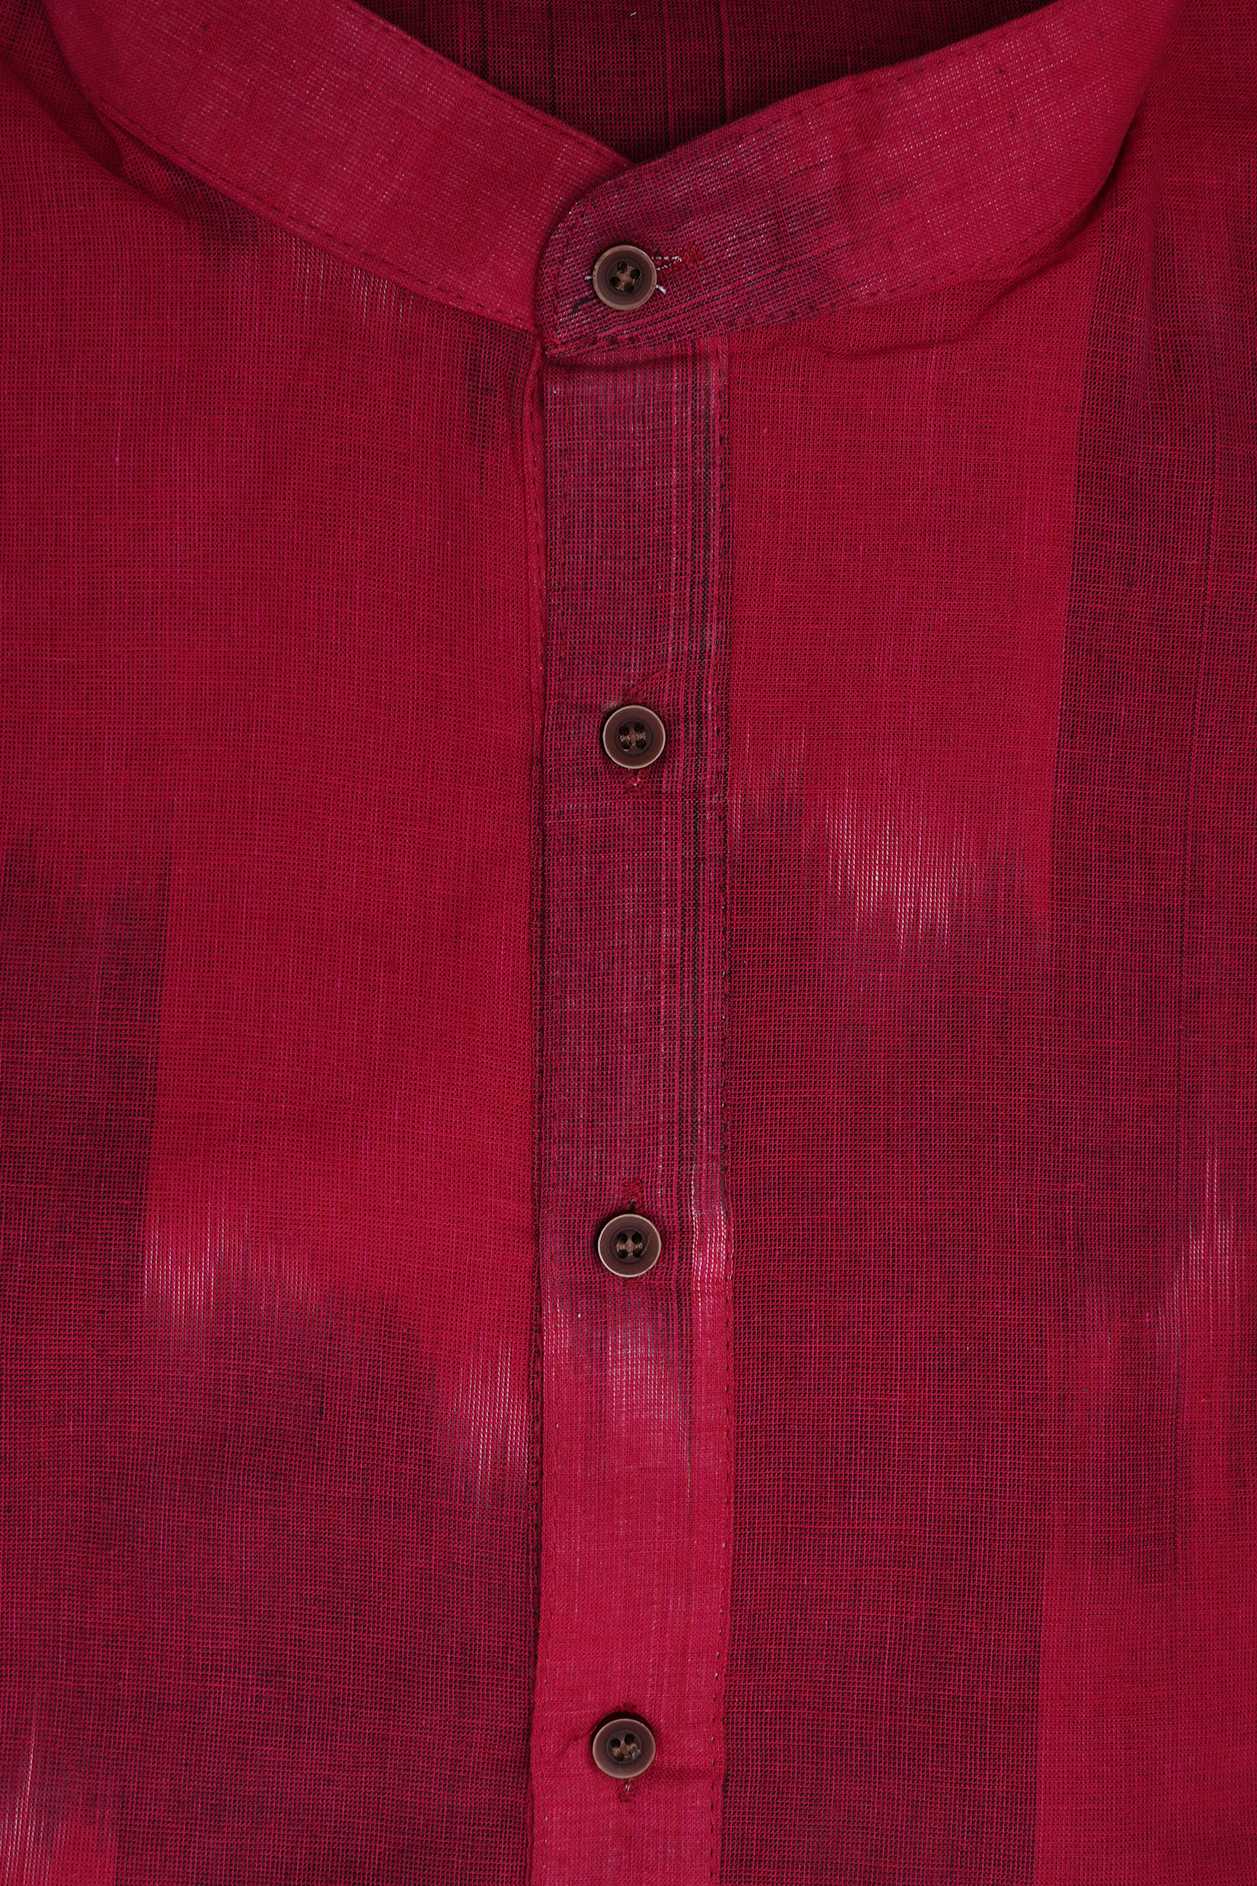 Red Printed Viscose Band / Mandarin / Chinese Collar kurti - Candycane  Merchants - 3423446